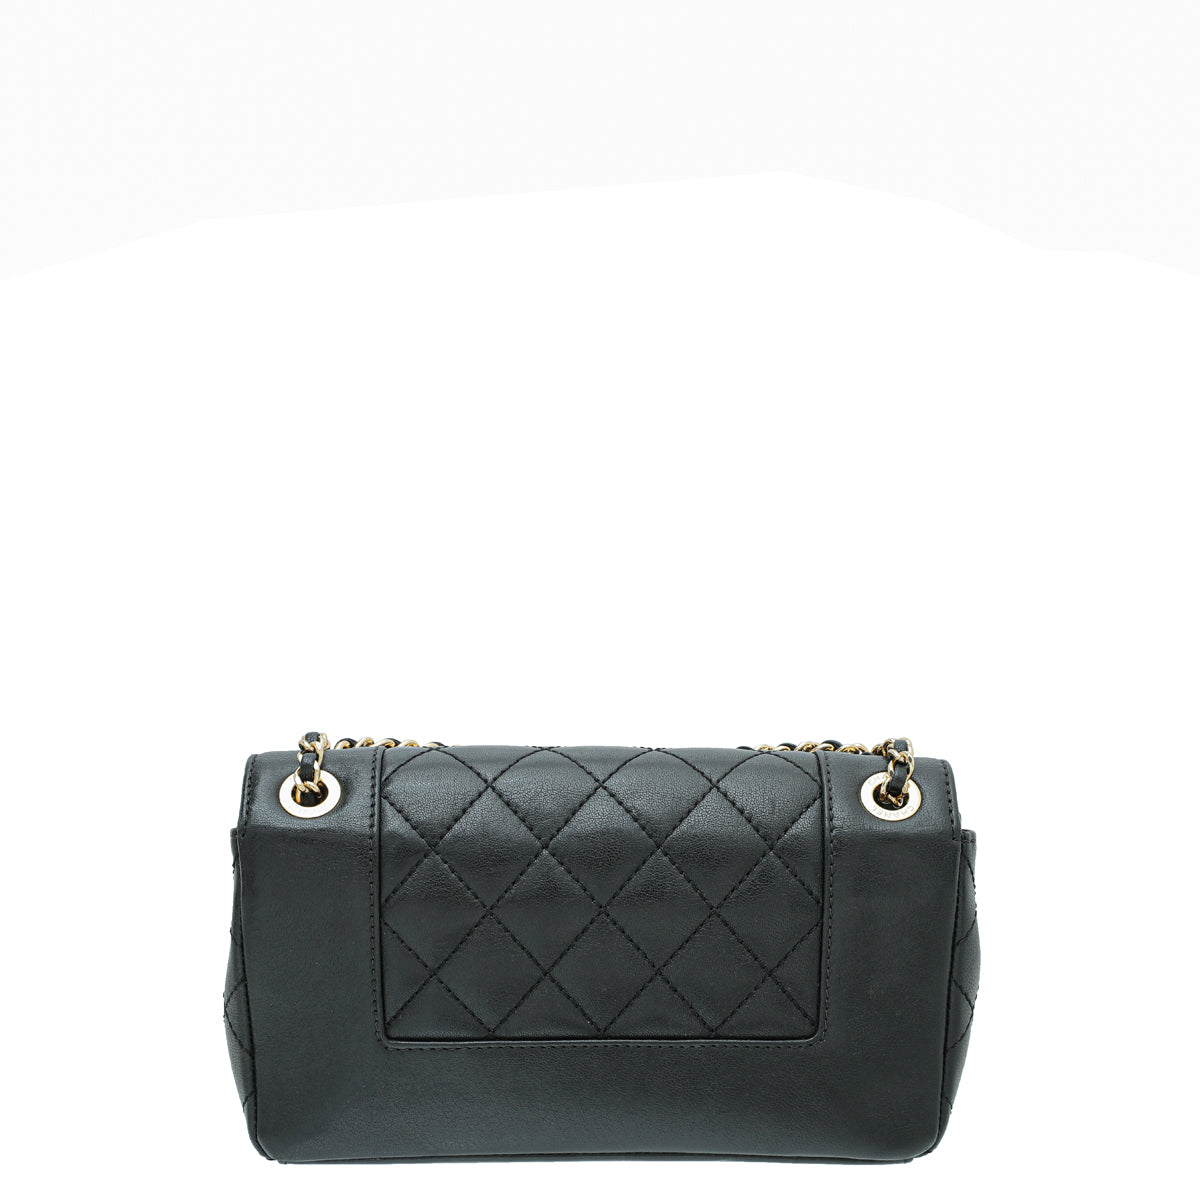 Chanel Black Mademoiselle Vintage Small Bag